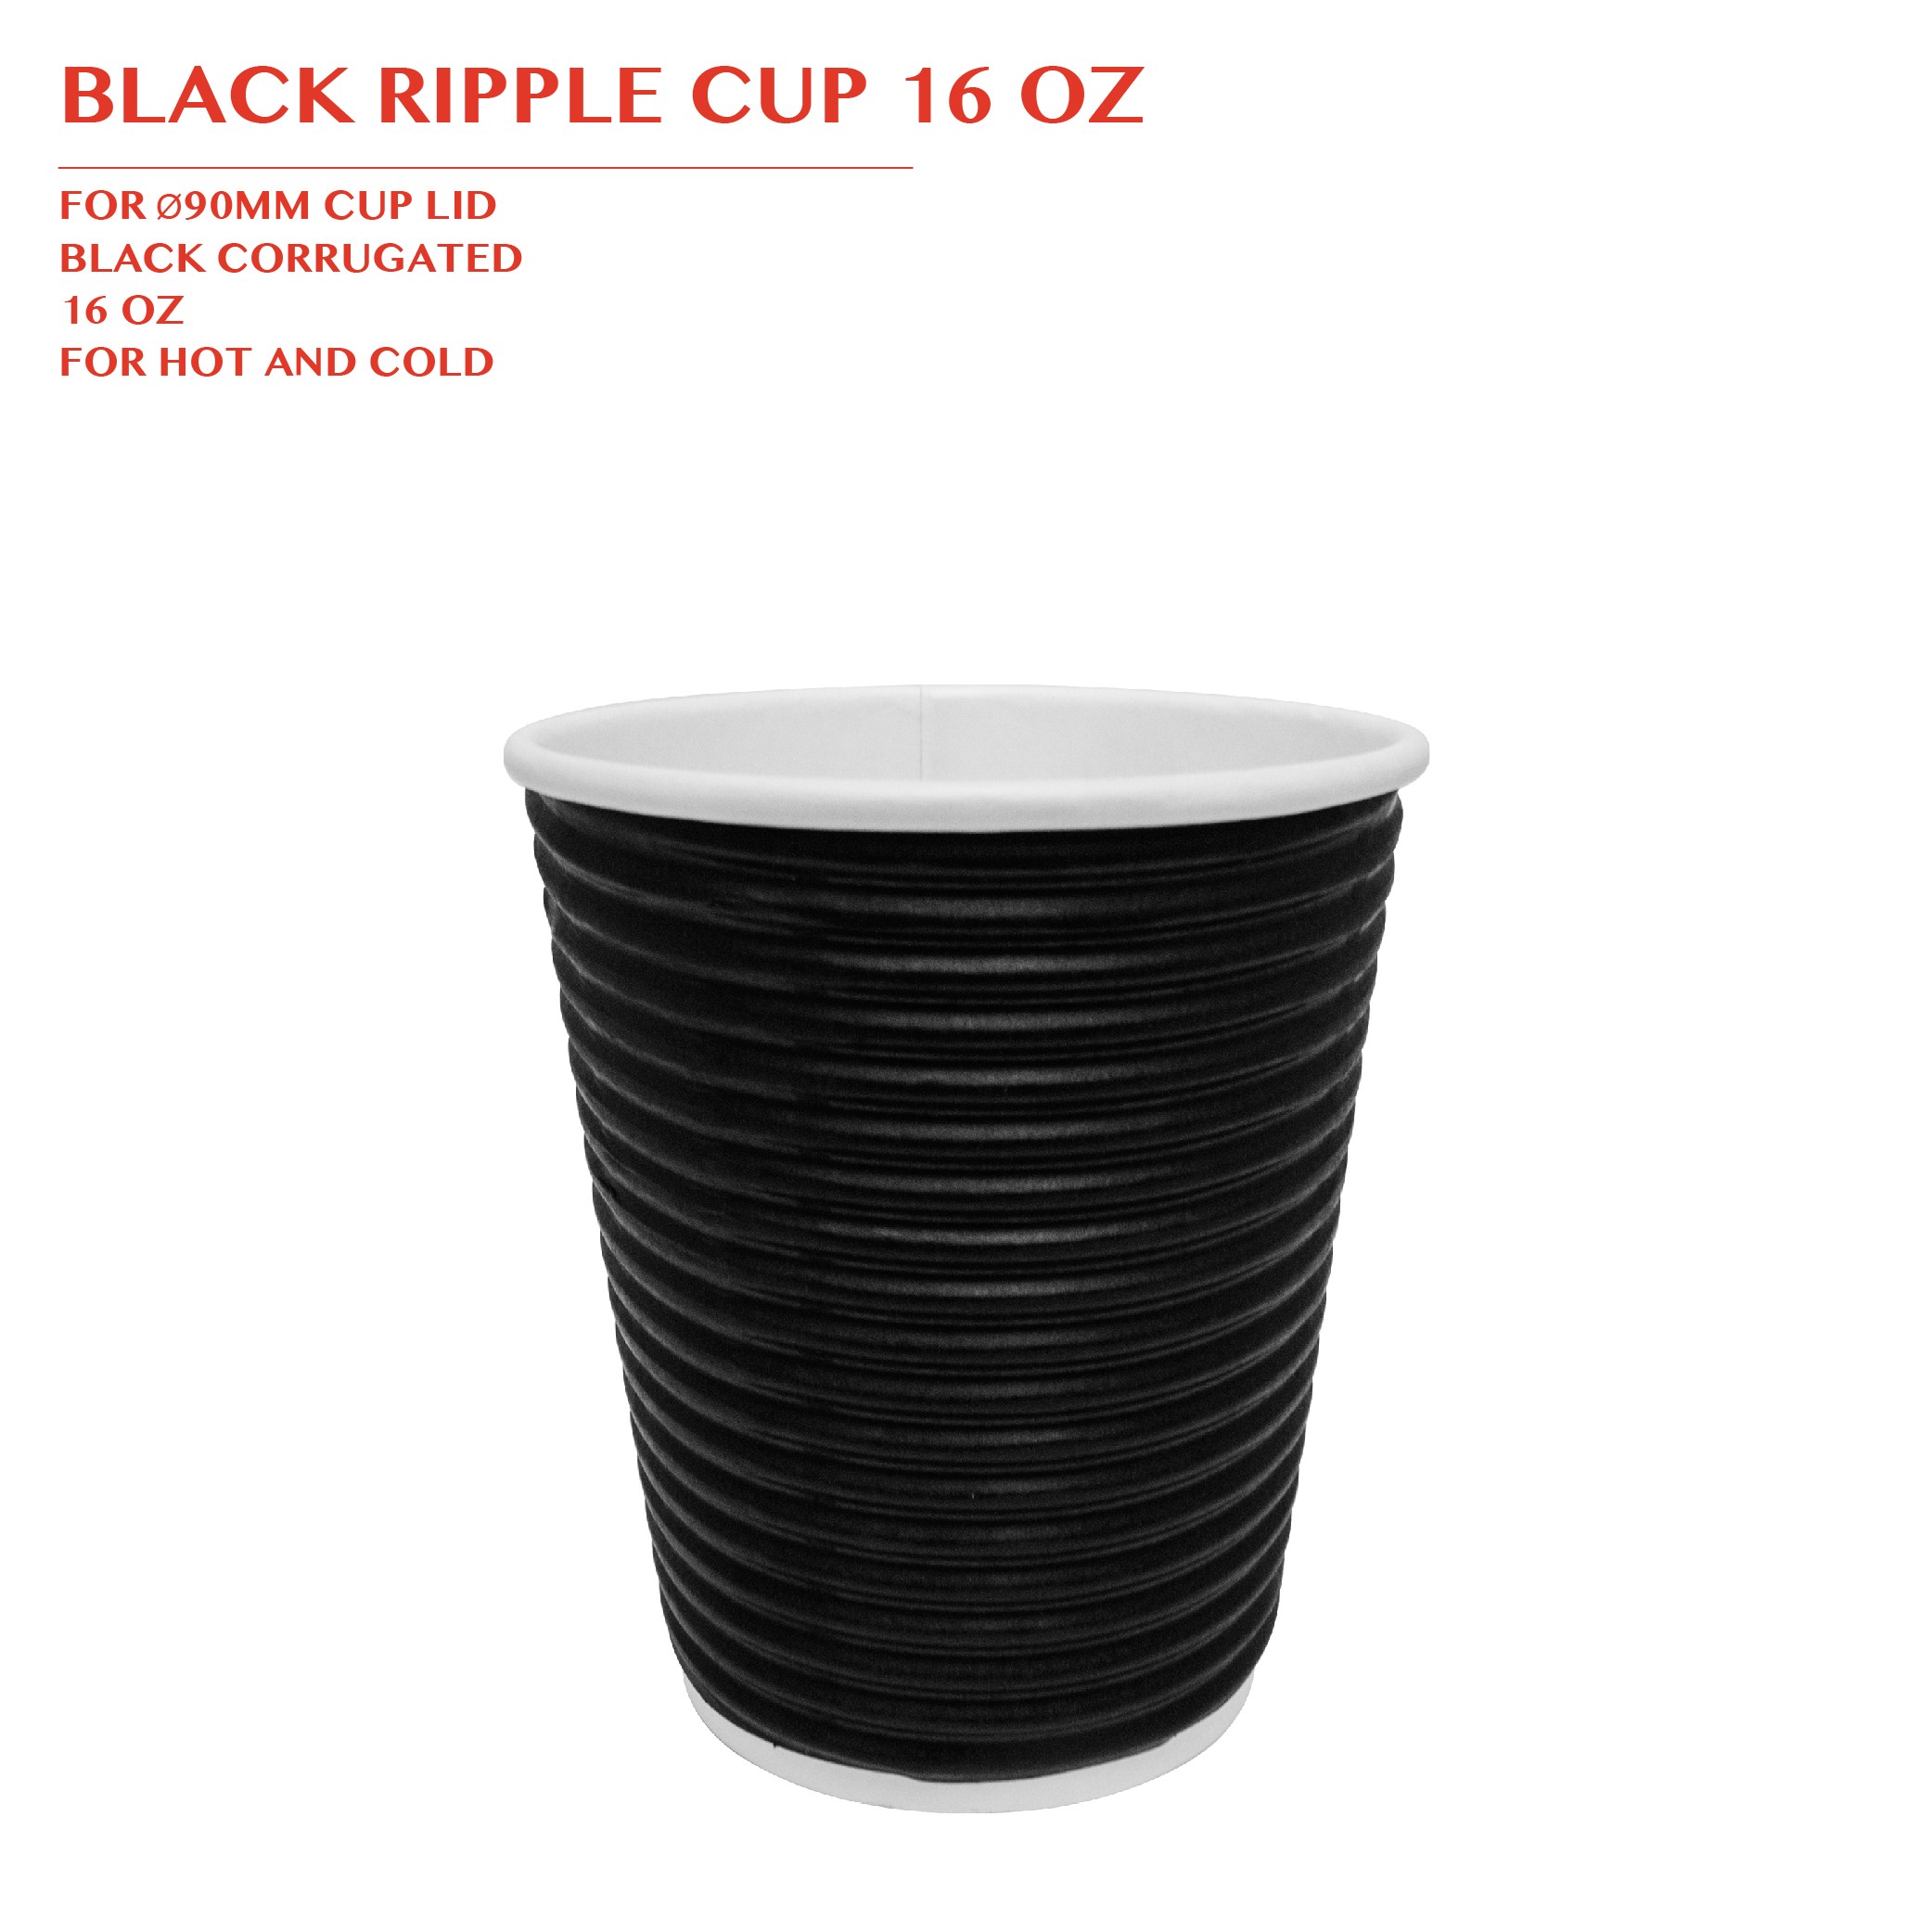 PRE-ORDER BLACK RIPPLE CUP 16 OZ 500PCS/CTN